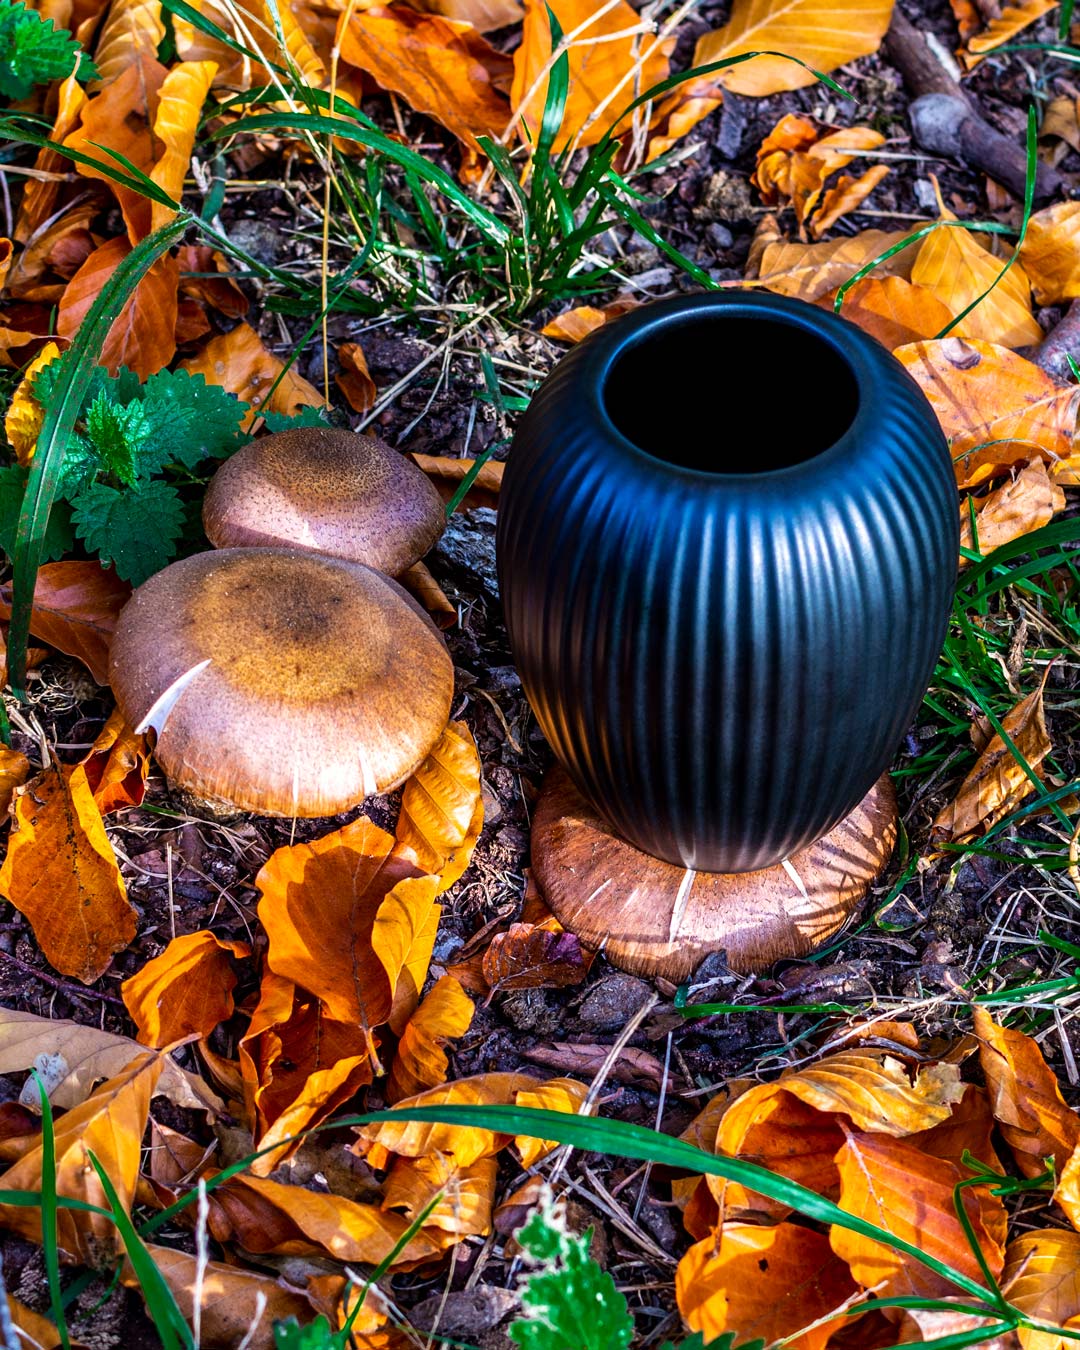 Lille sort vase fra Michael Andersen Keramik Model 4767 på svampe i skovbund